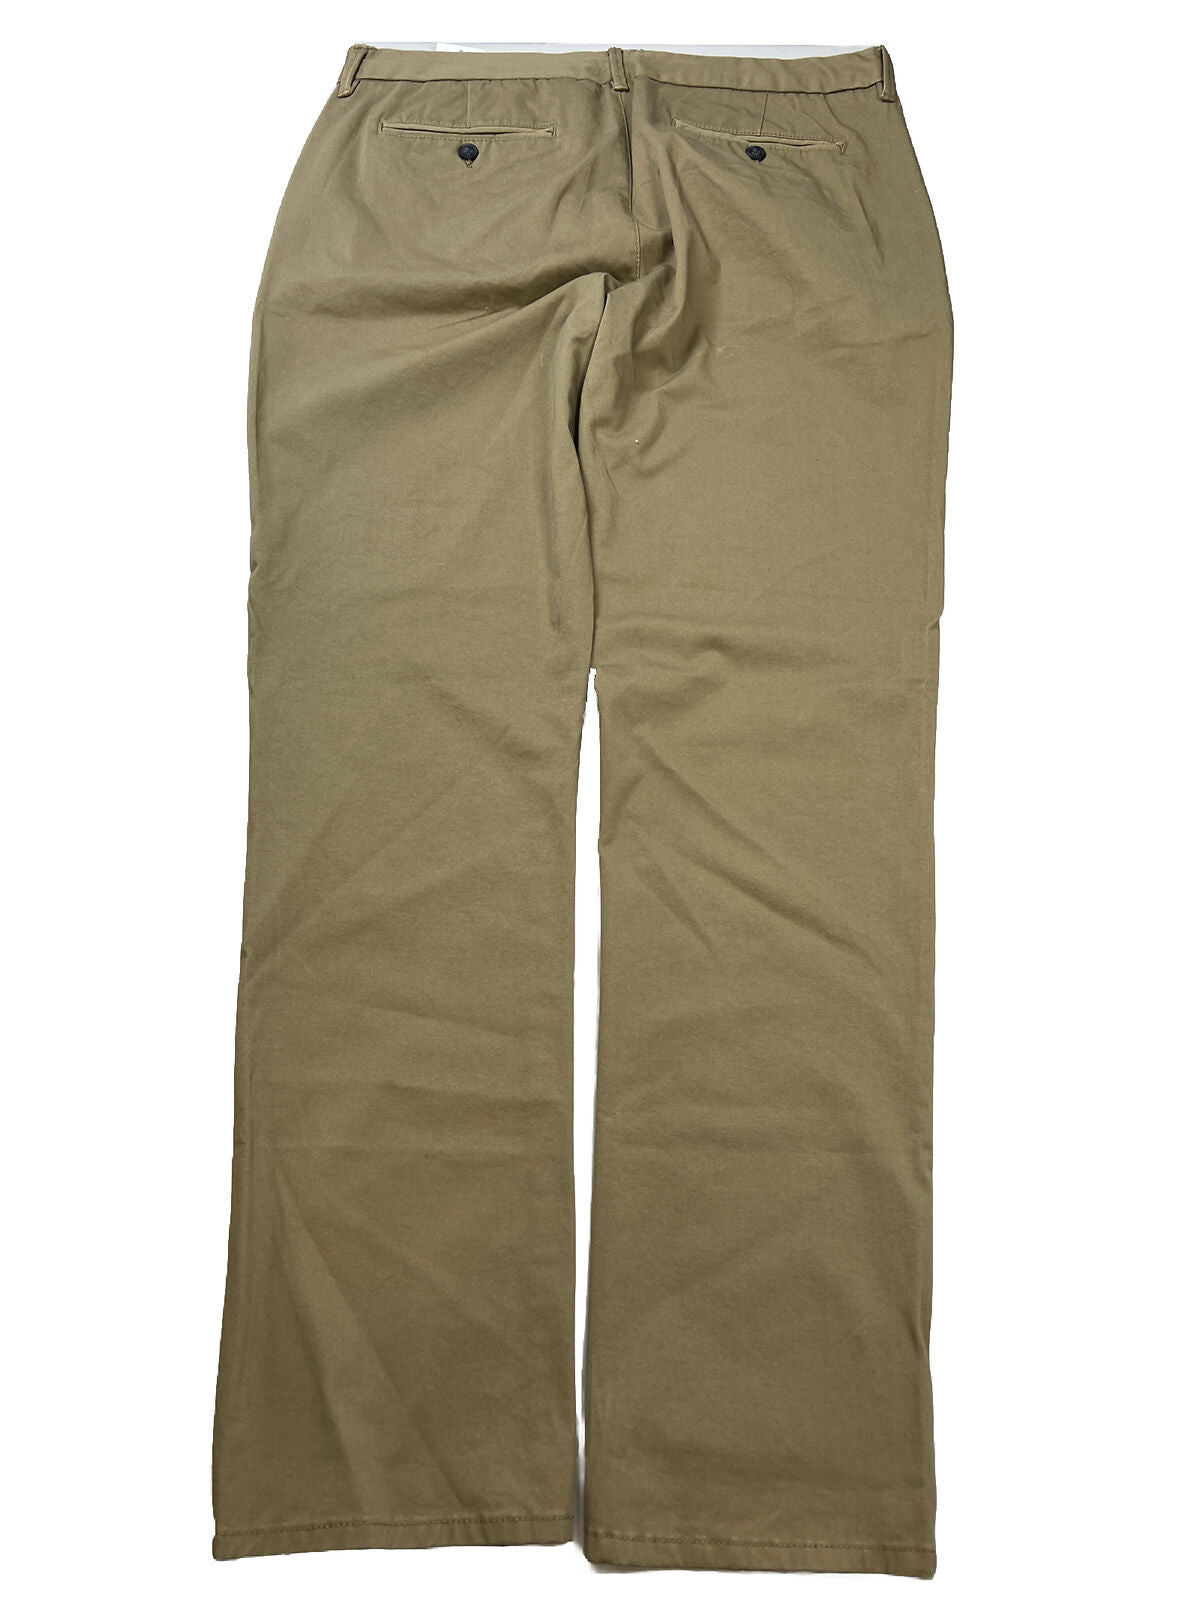 NEW Taylrd Men's Beige 4-Way Stretch Chino Pants - 38x34